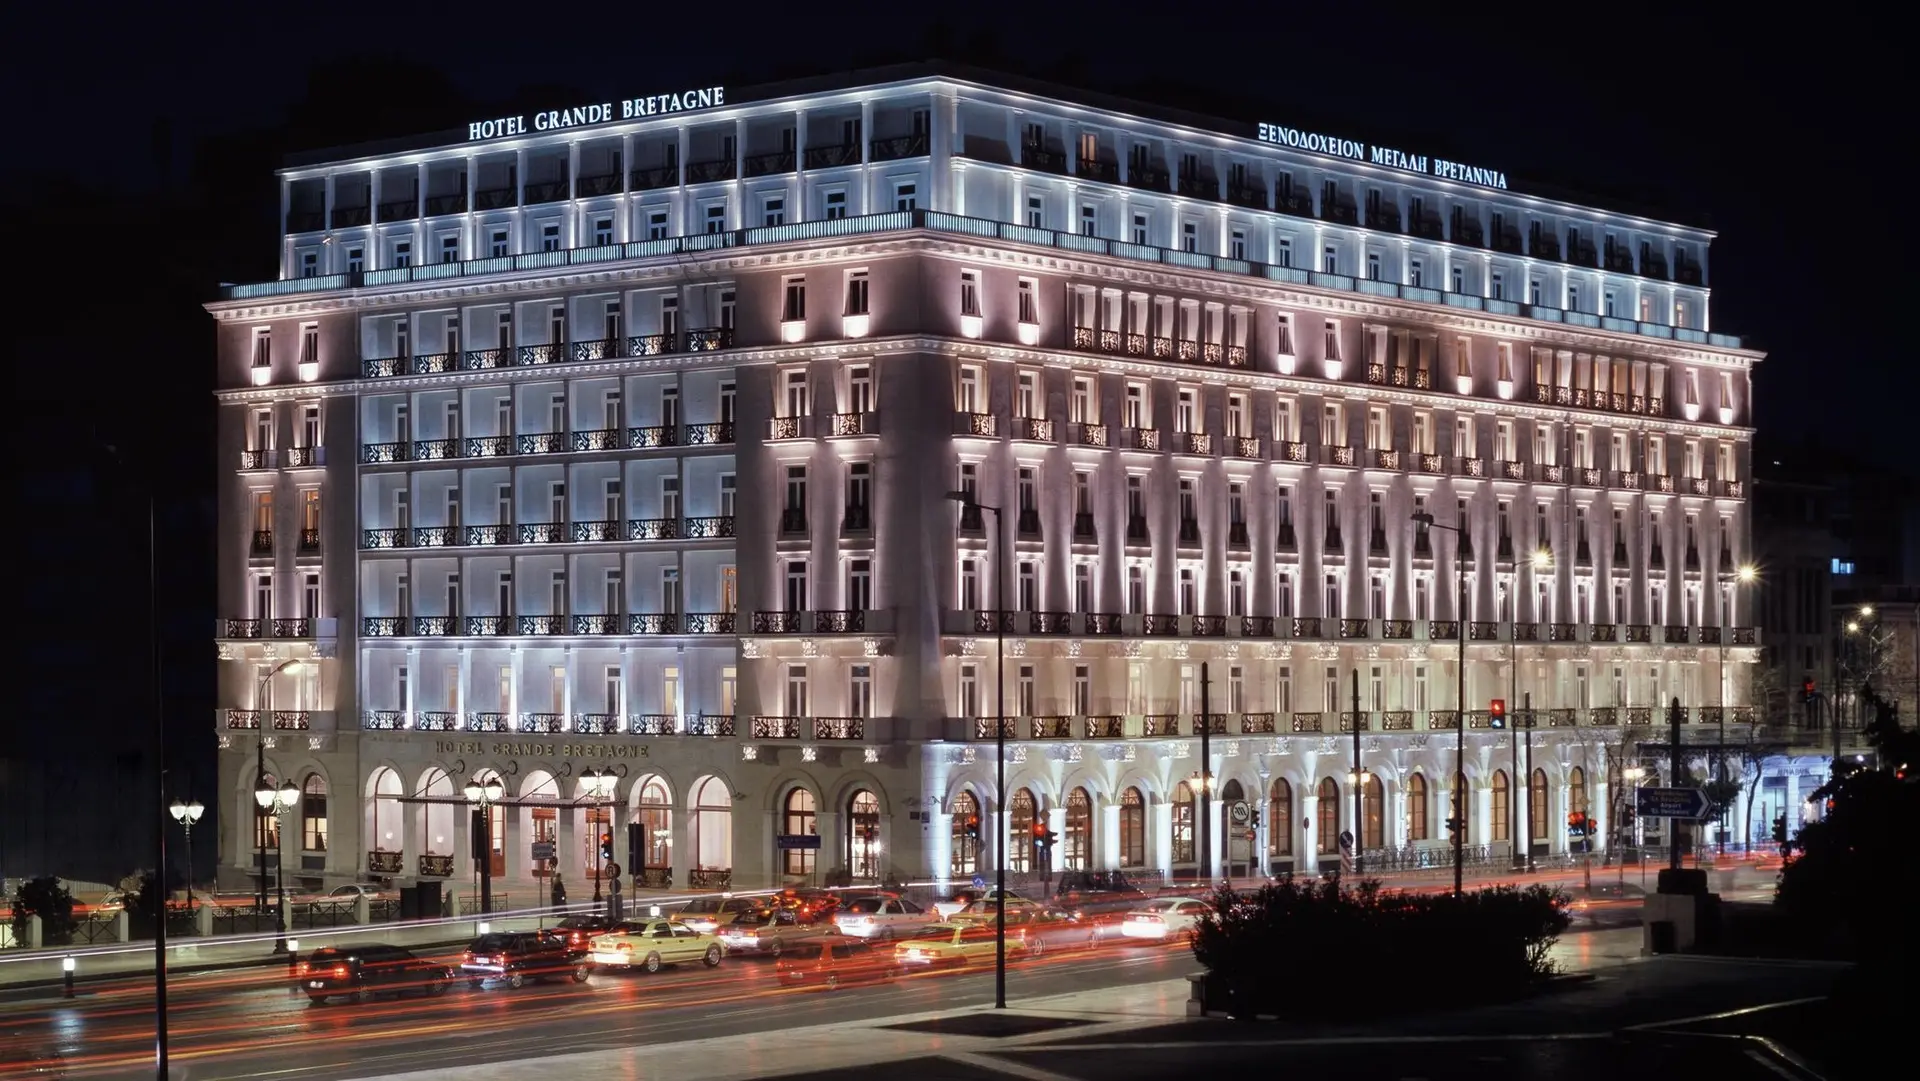 Hotel grande bretagne. A Modern hotel in a rectangular shape made of white stone.